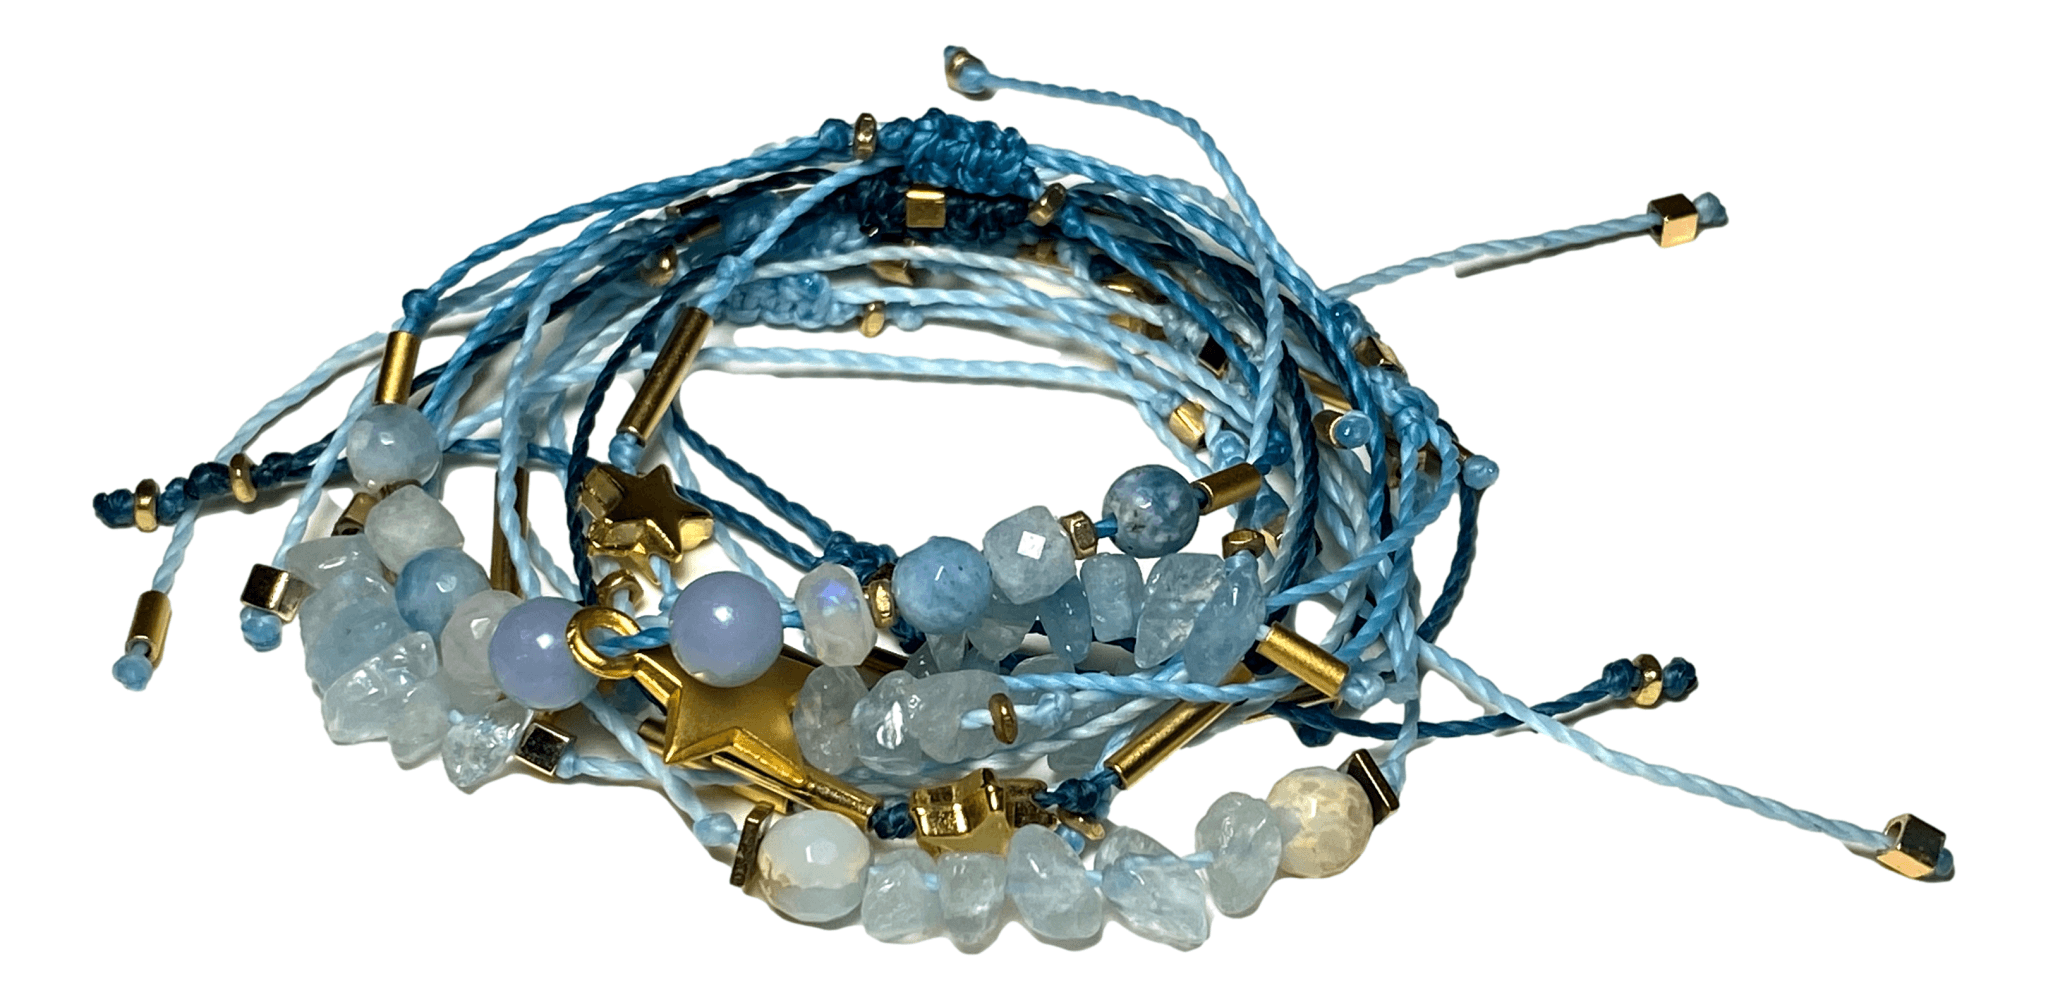 Bracelet Adjustable Assorted Blue Tones Nylon Thread Semi-precious Stonestyles Handmade by Skilled Artisan - Ysleta Mission Gift Shop- VOTED El Paso's Best Gift Shop